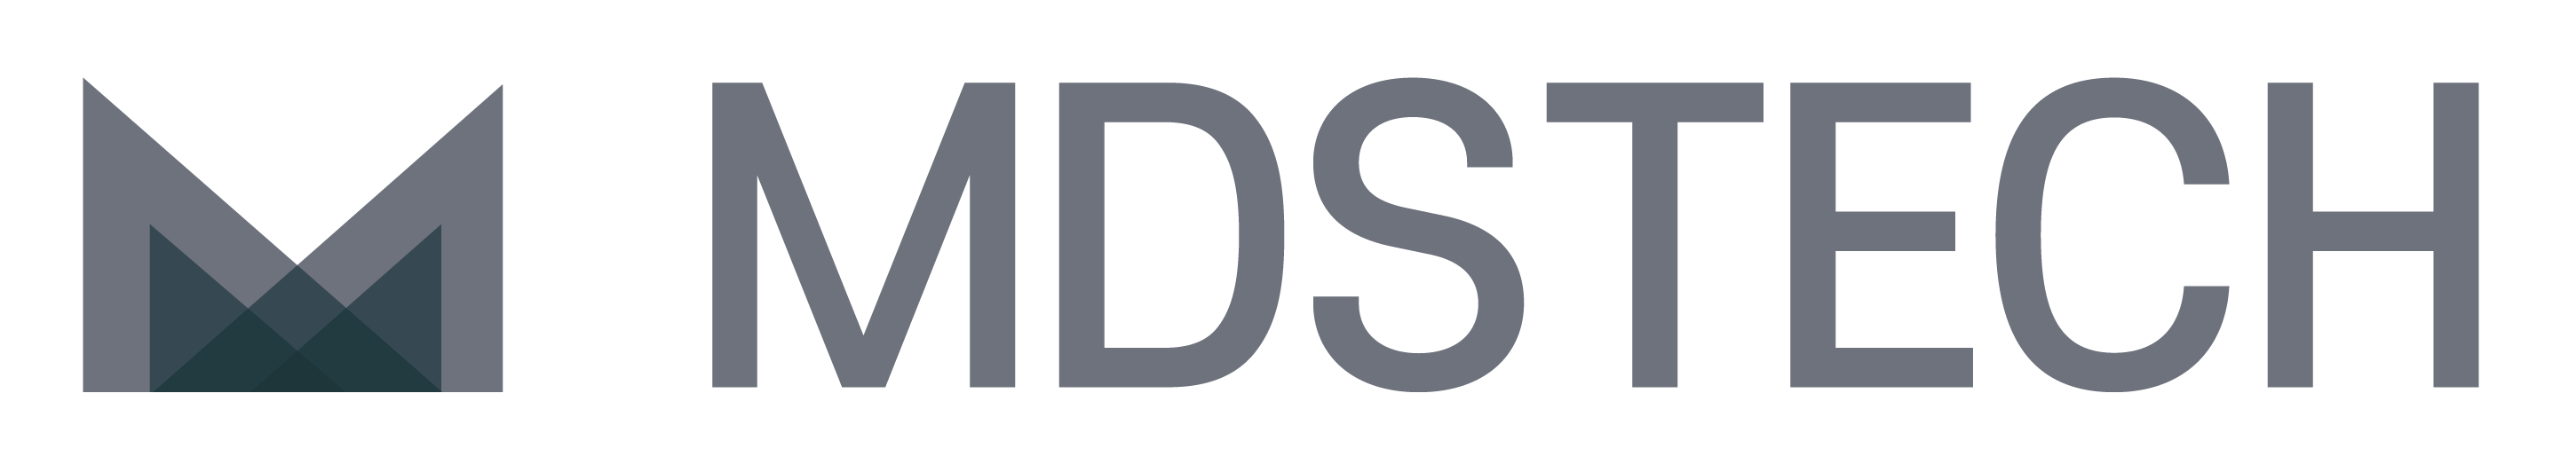 MDS Tech_Logo_Gray